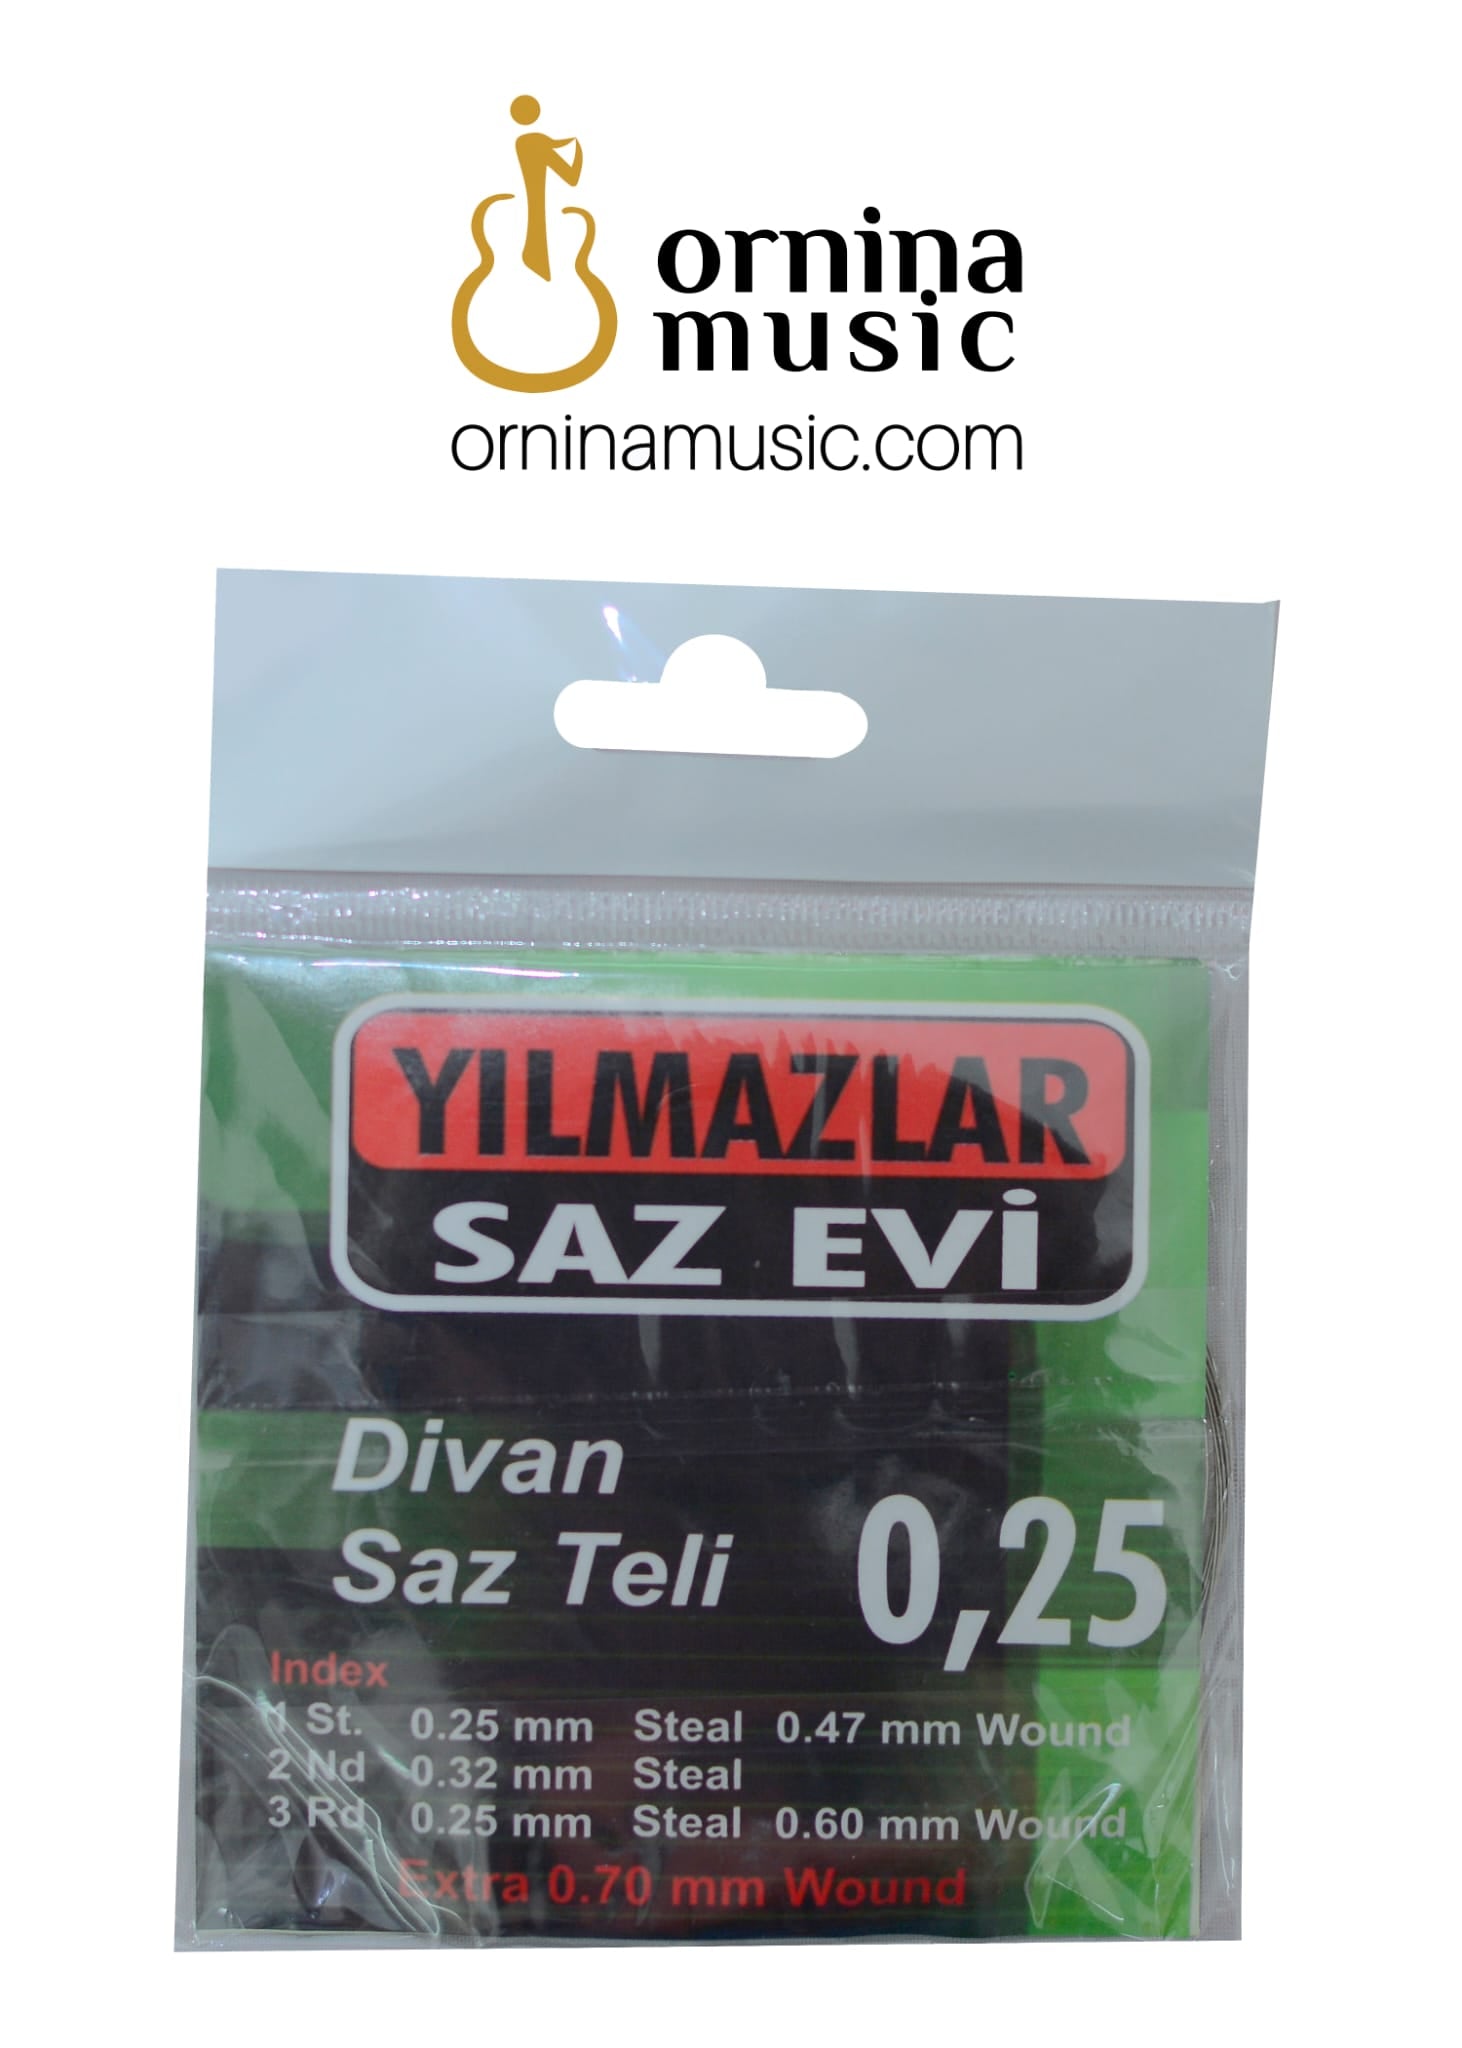 Online store saz strings - Buy Divan Saz strings